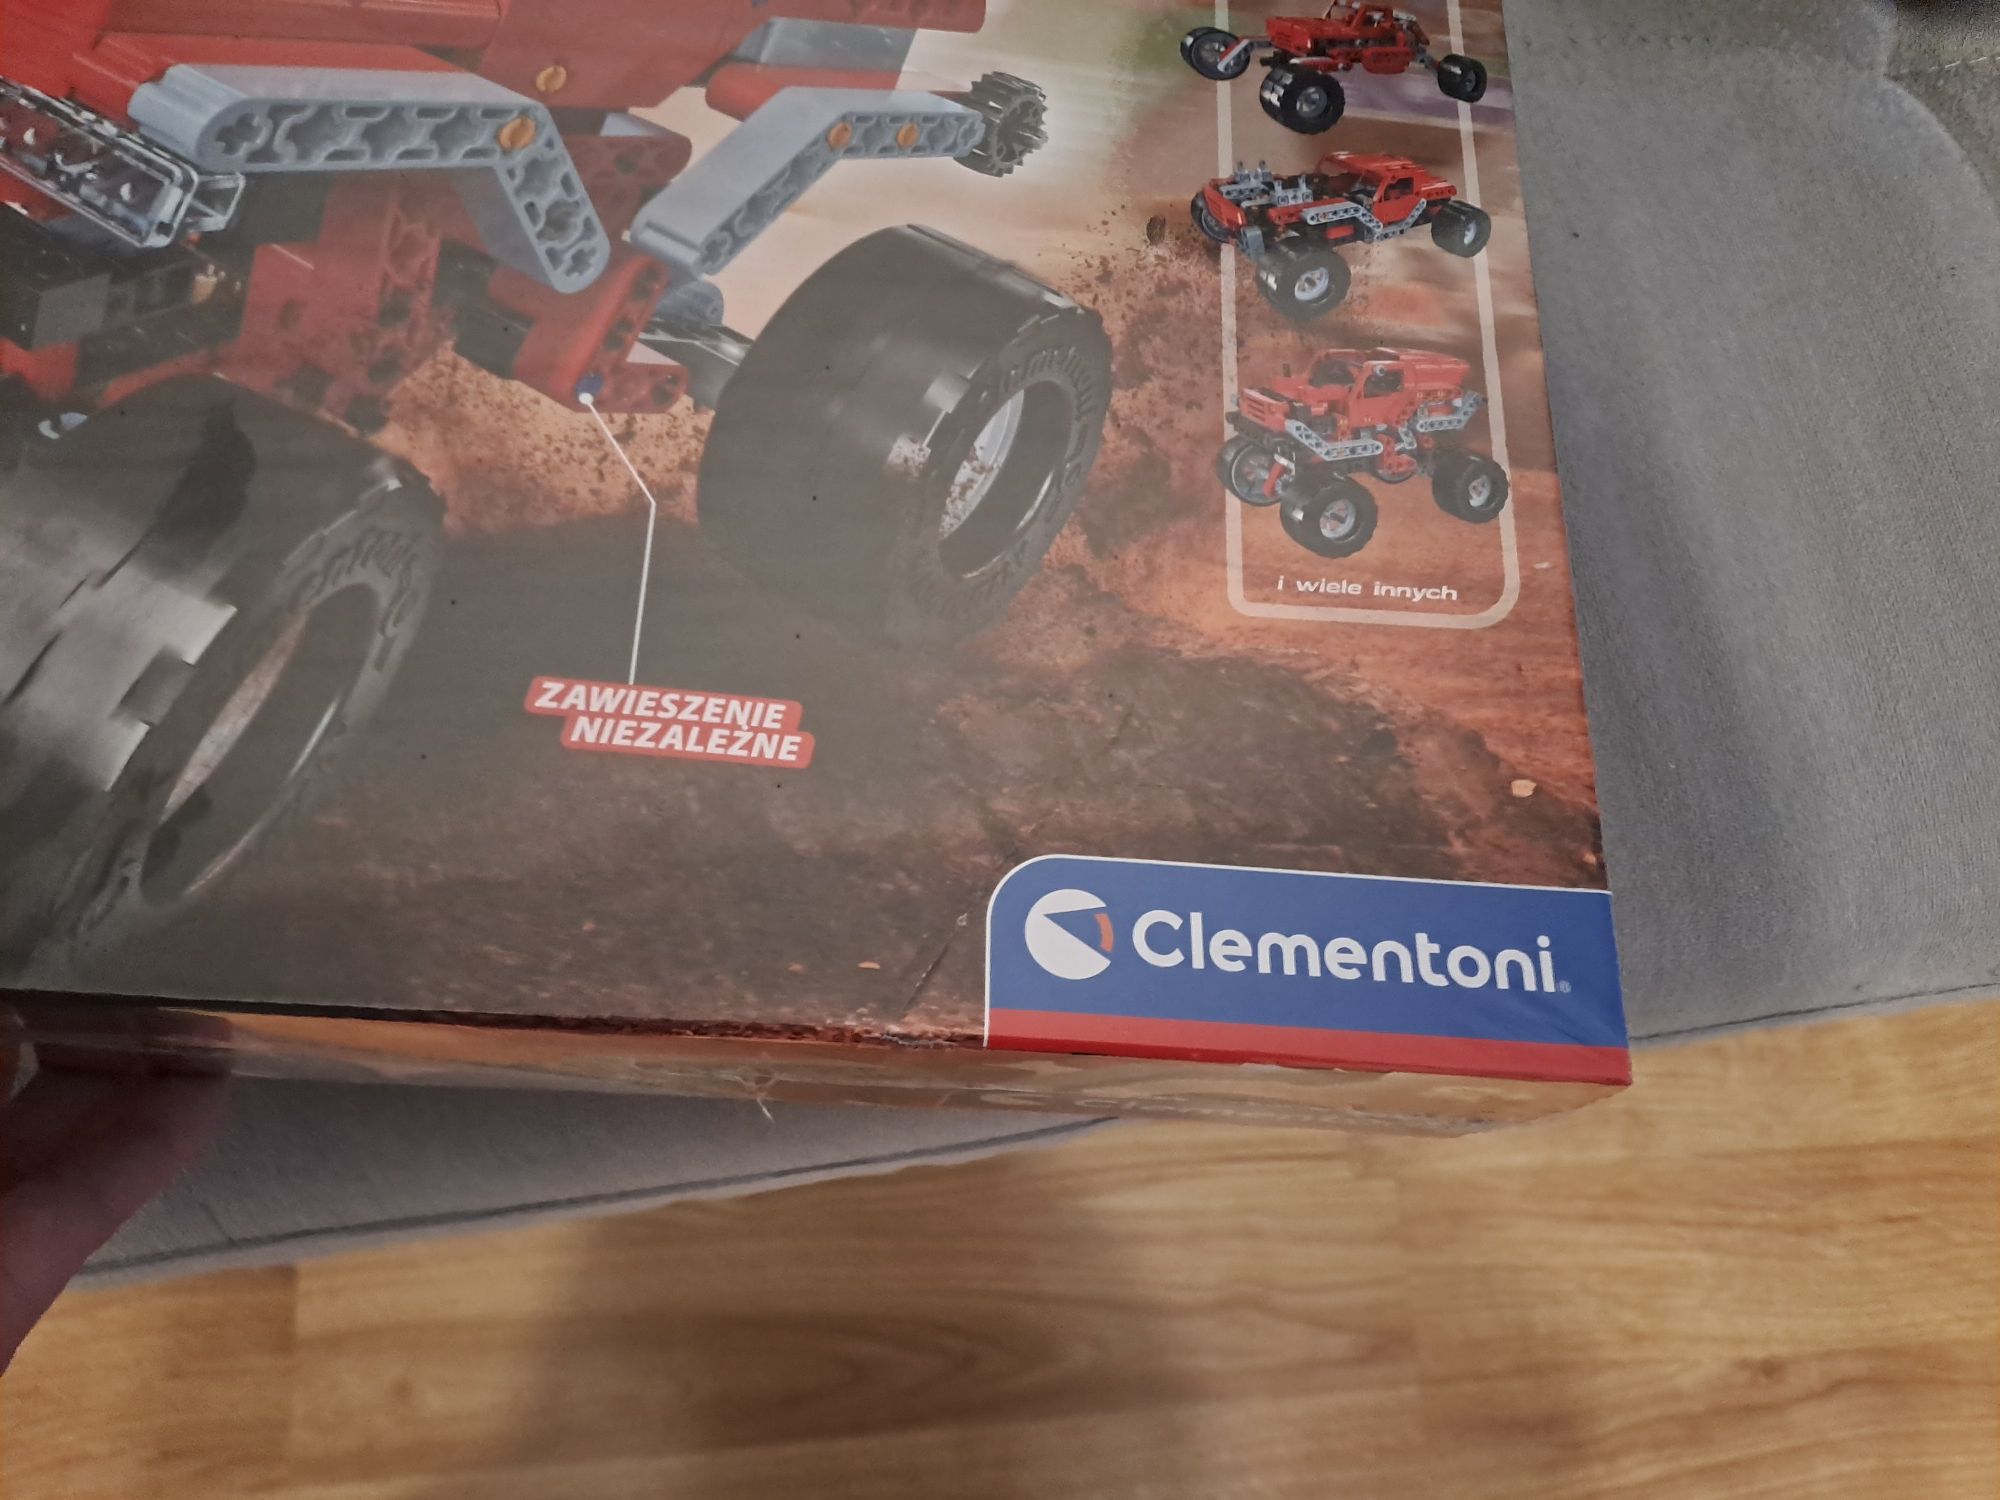 Clementoni Mechanics Monster Truck